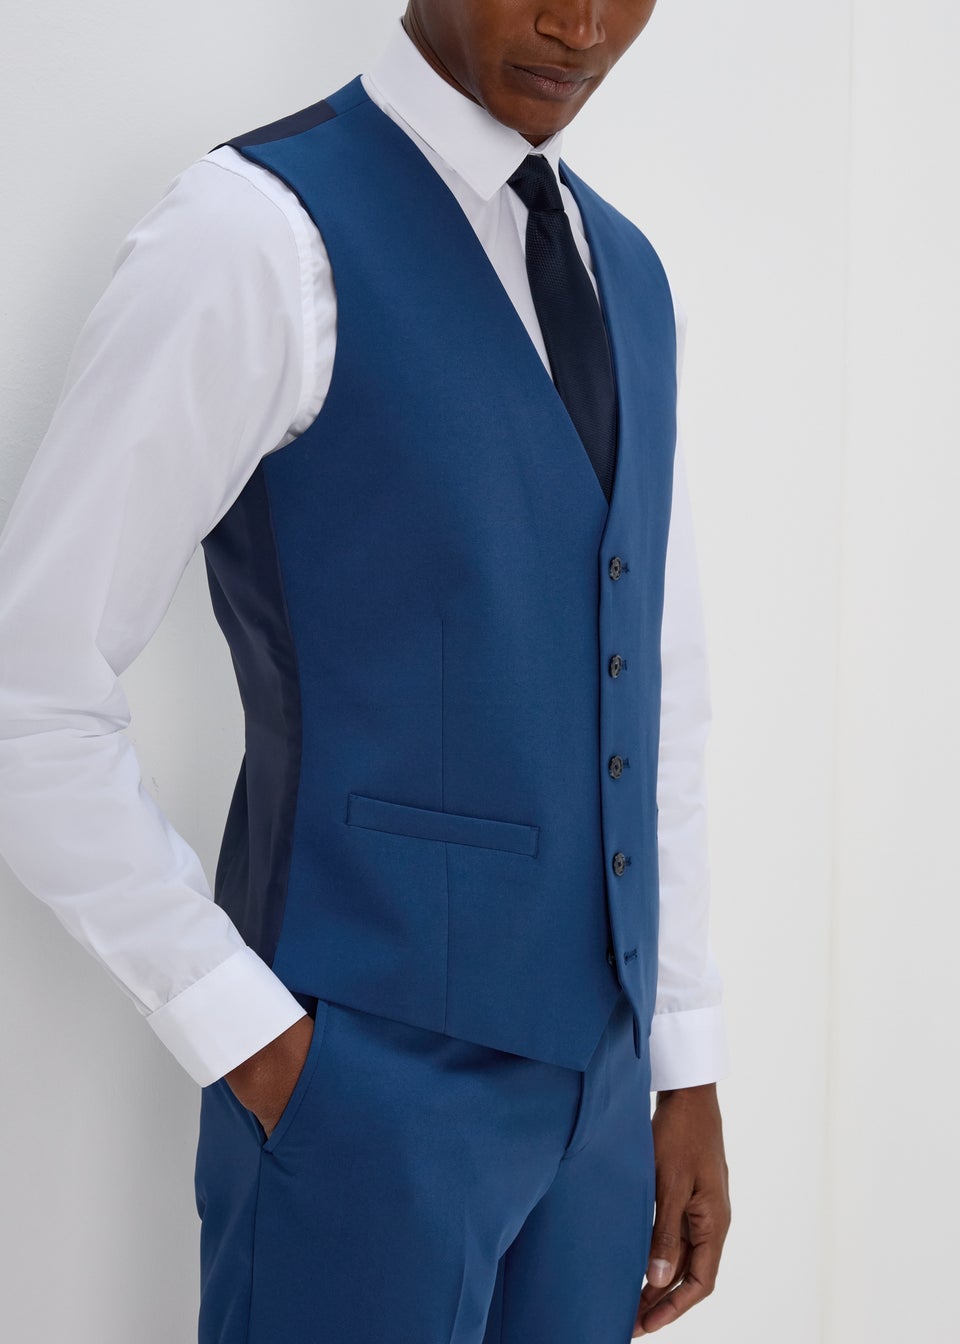 Taylor & Wright Panama Blue Suit Waistcoat